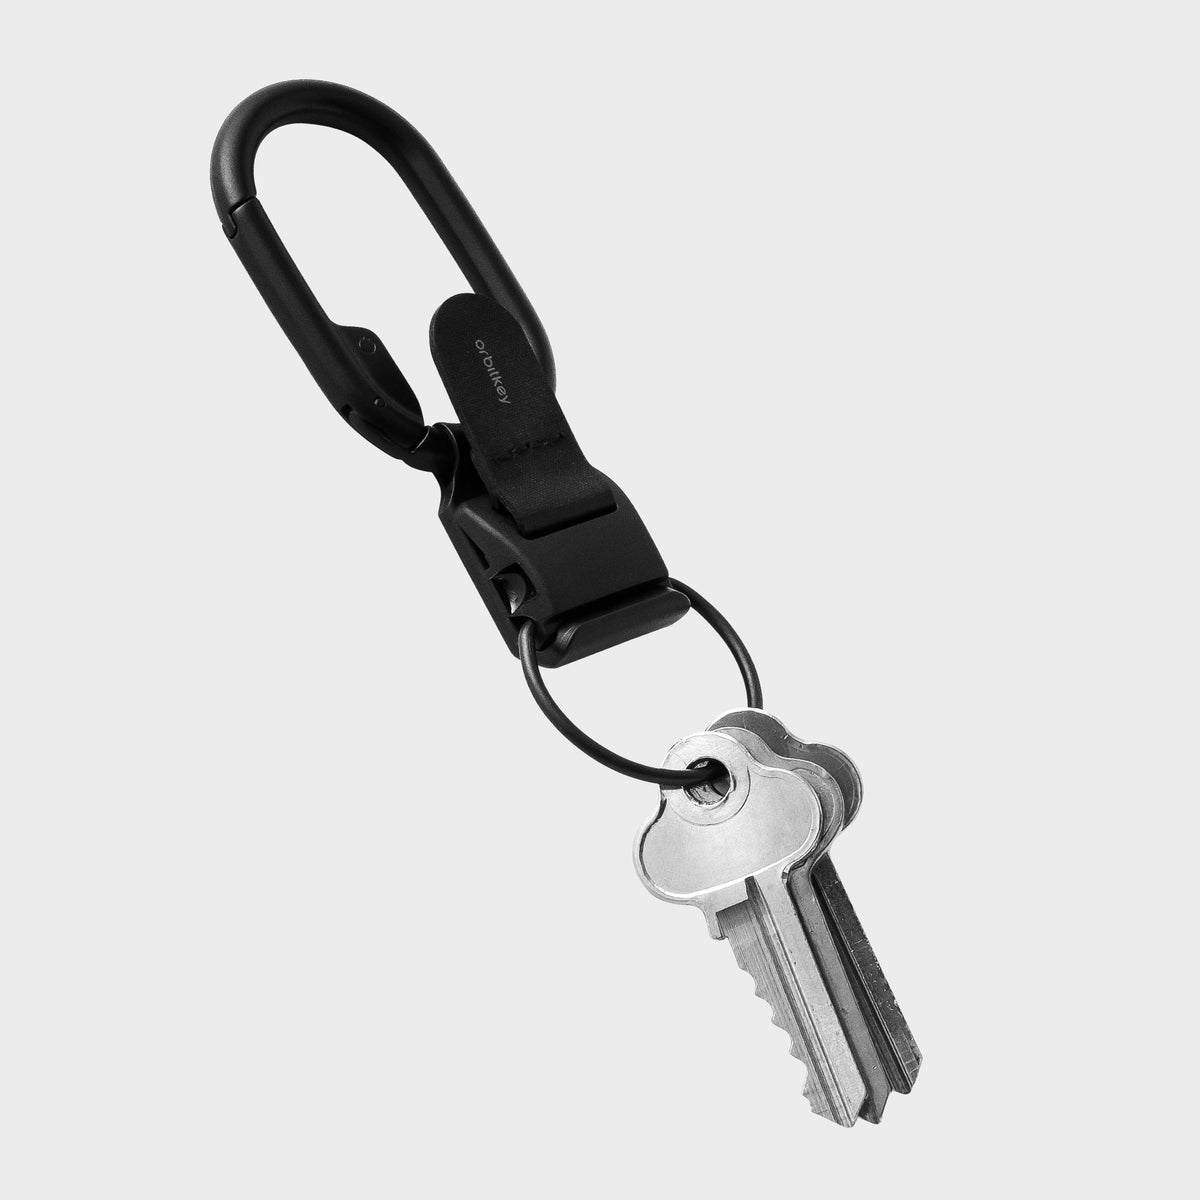 Magnetic keychain, Attach keys yo your cardholder